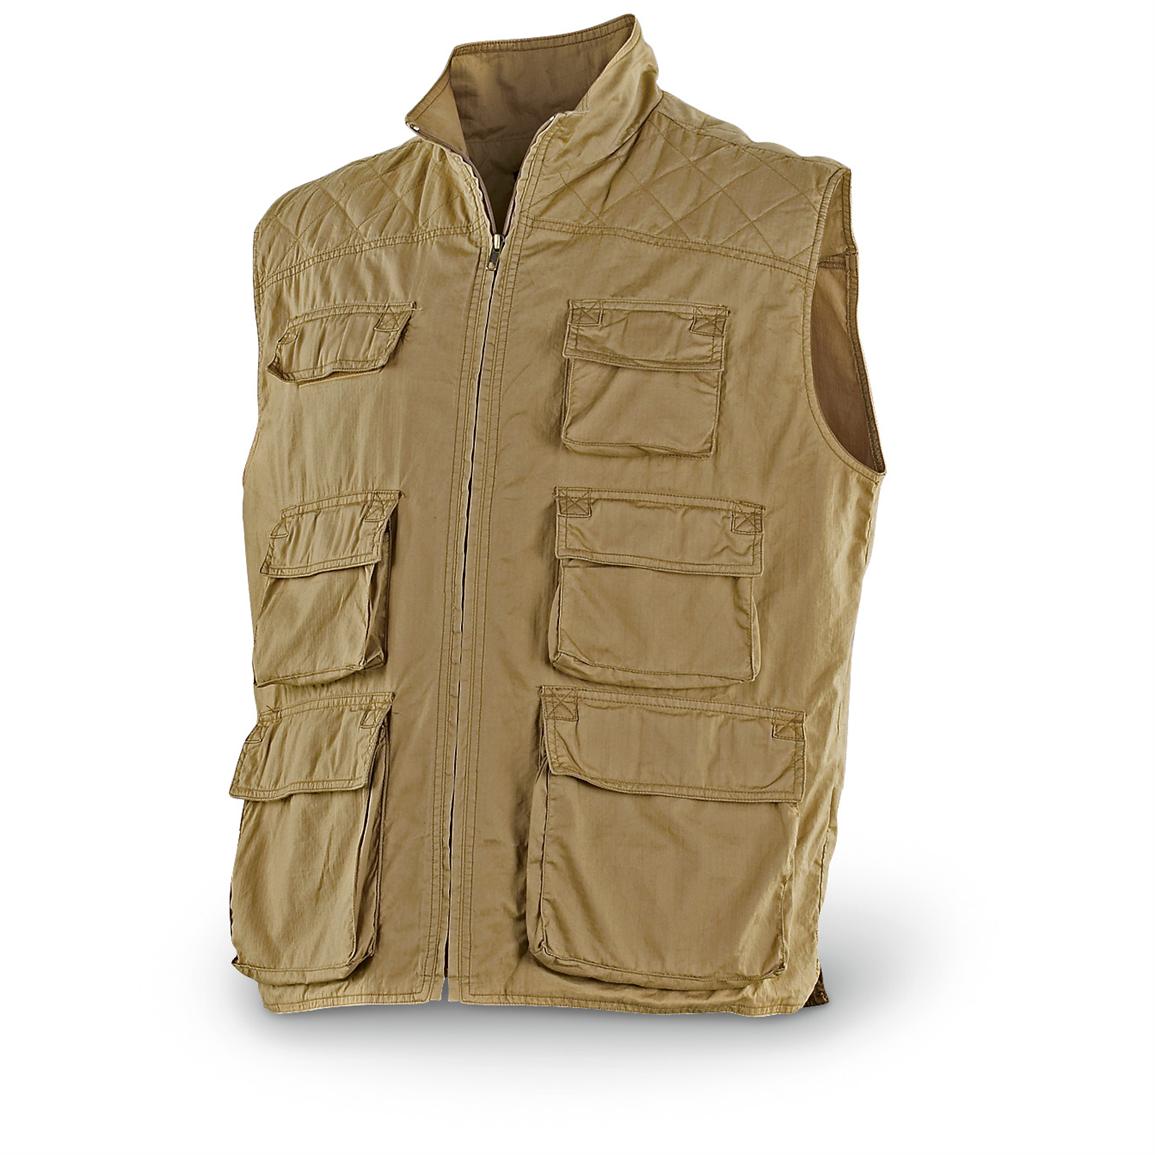 Guide Gear® Outdoor Vest, Khaki - 152986, Vests at Sportsman's Guide